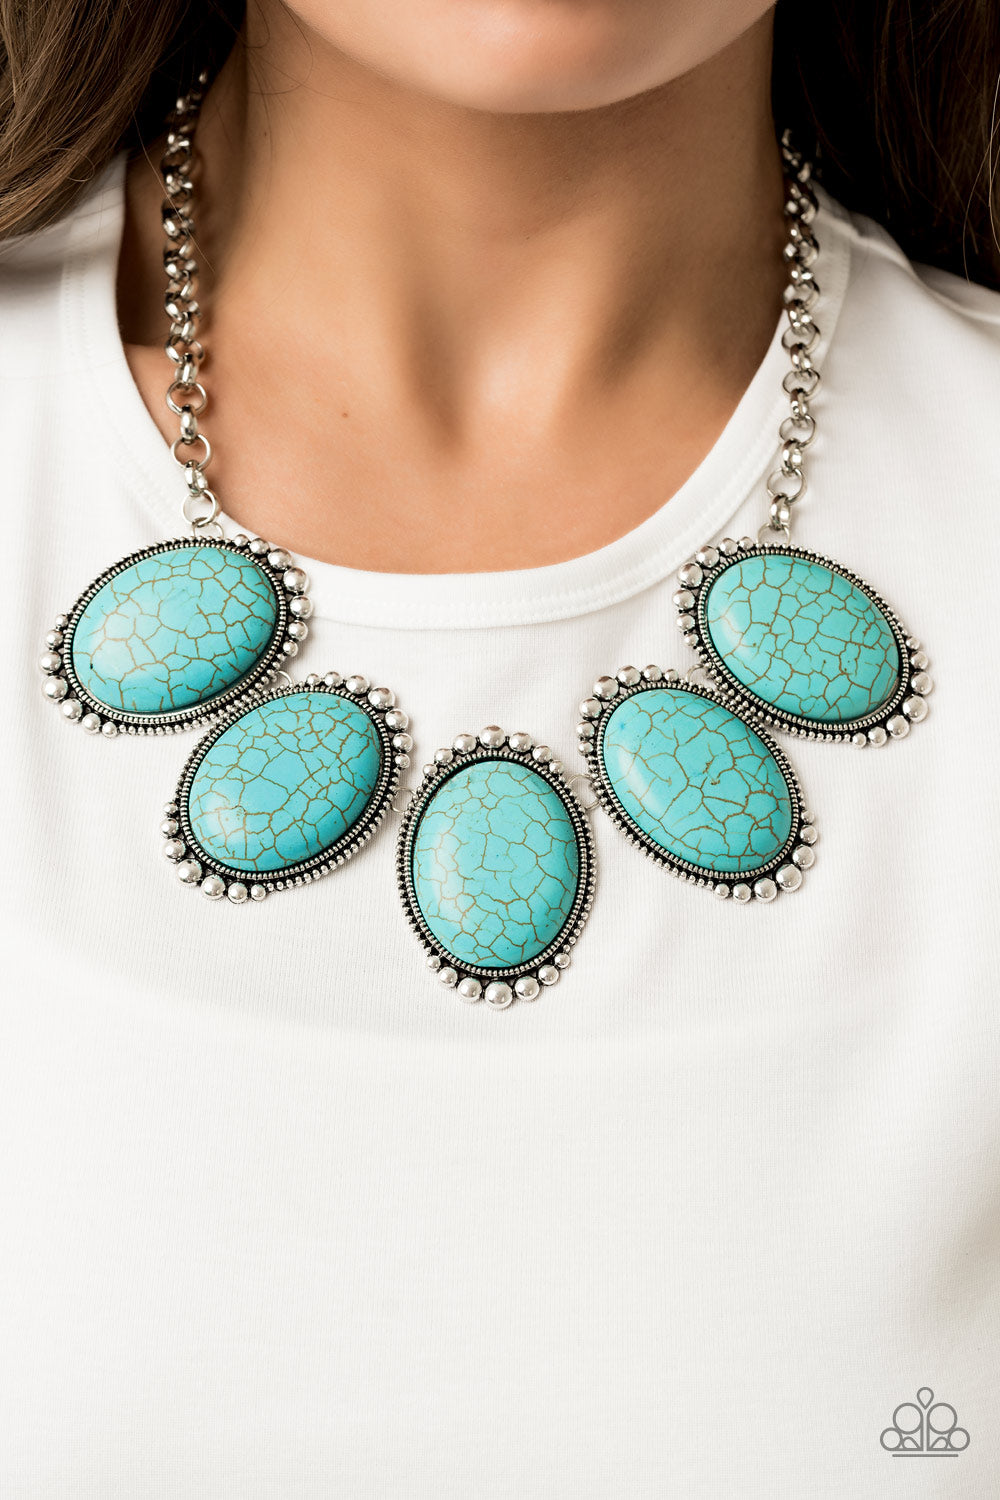 Paparazzi Accessories - Prairie Goddess - Turquoise  (Blue) Necklace